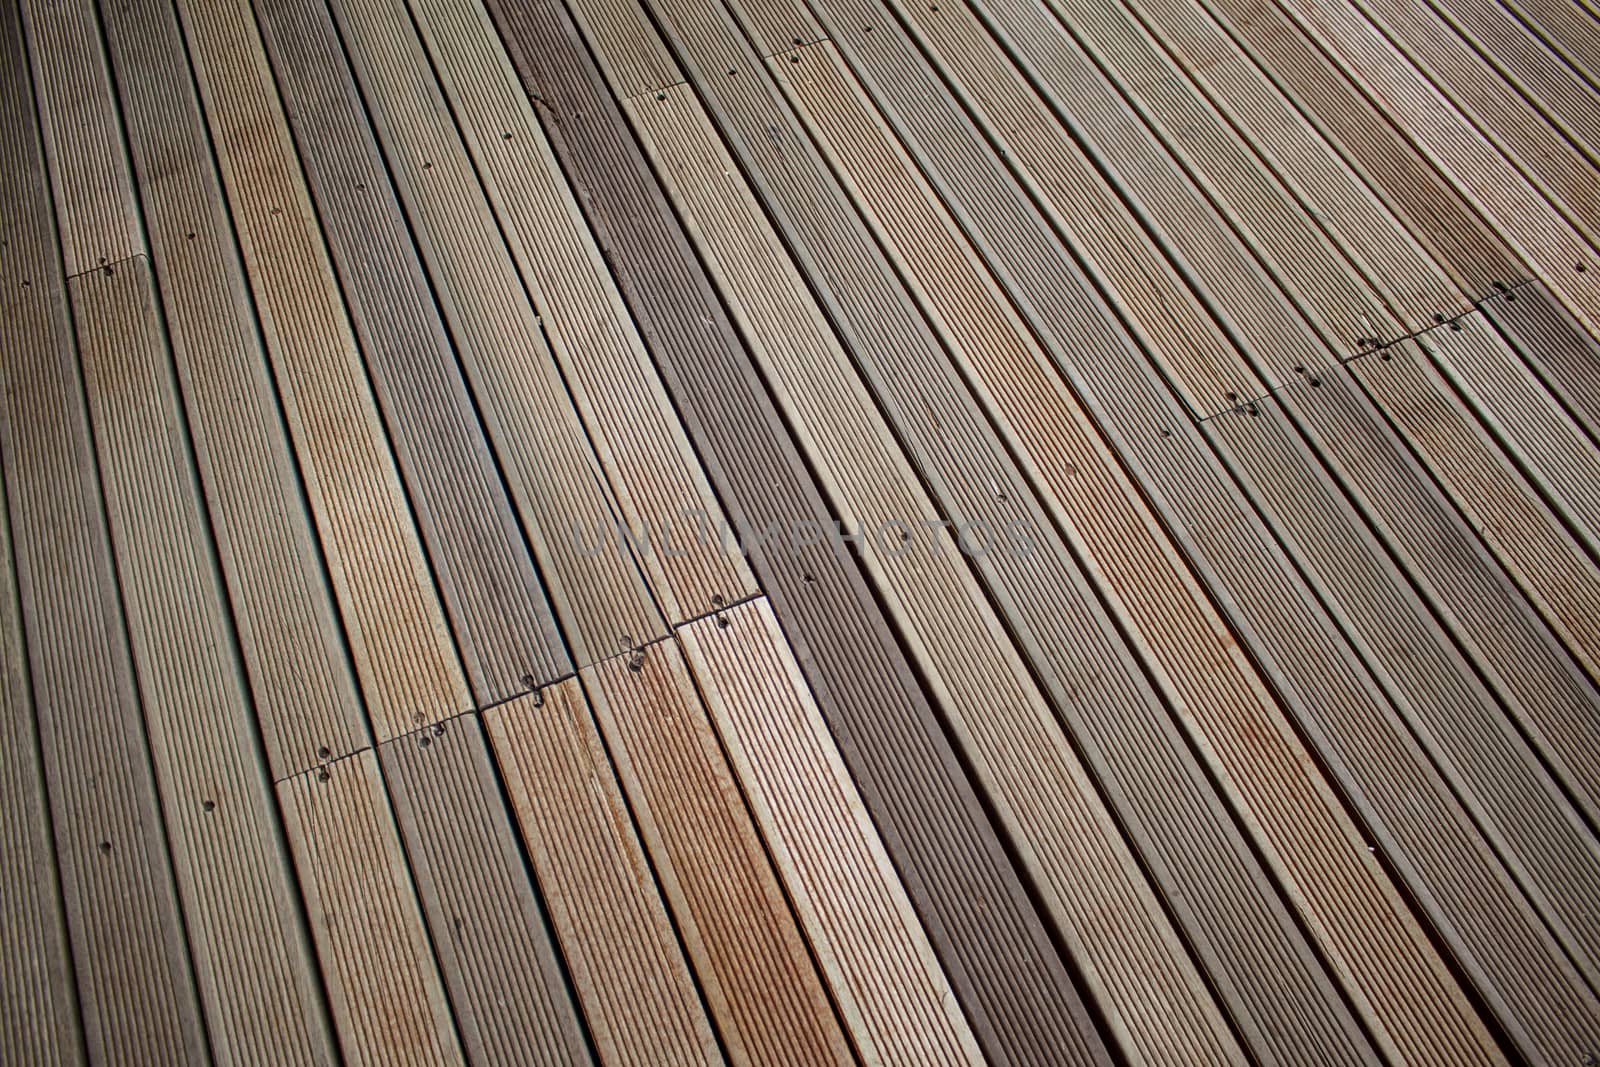 Wooden deck background lumber pattern by worrayuth